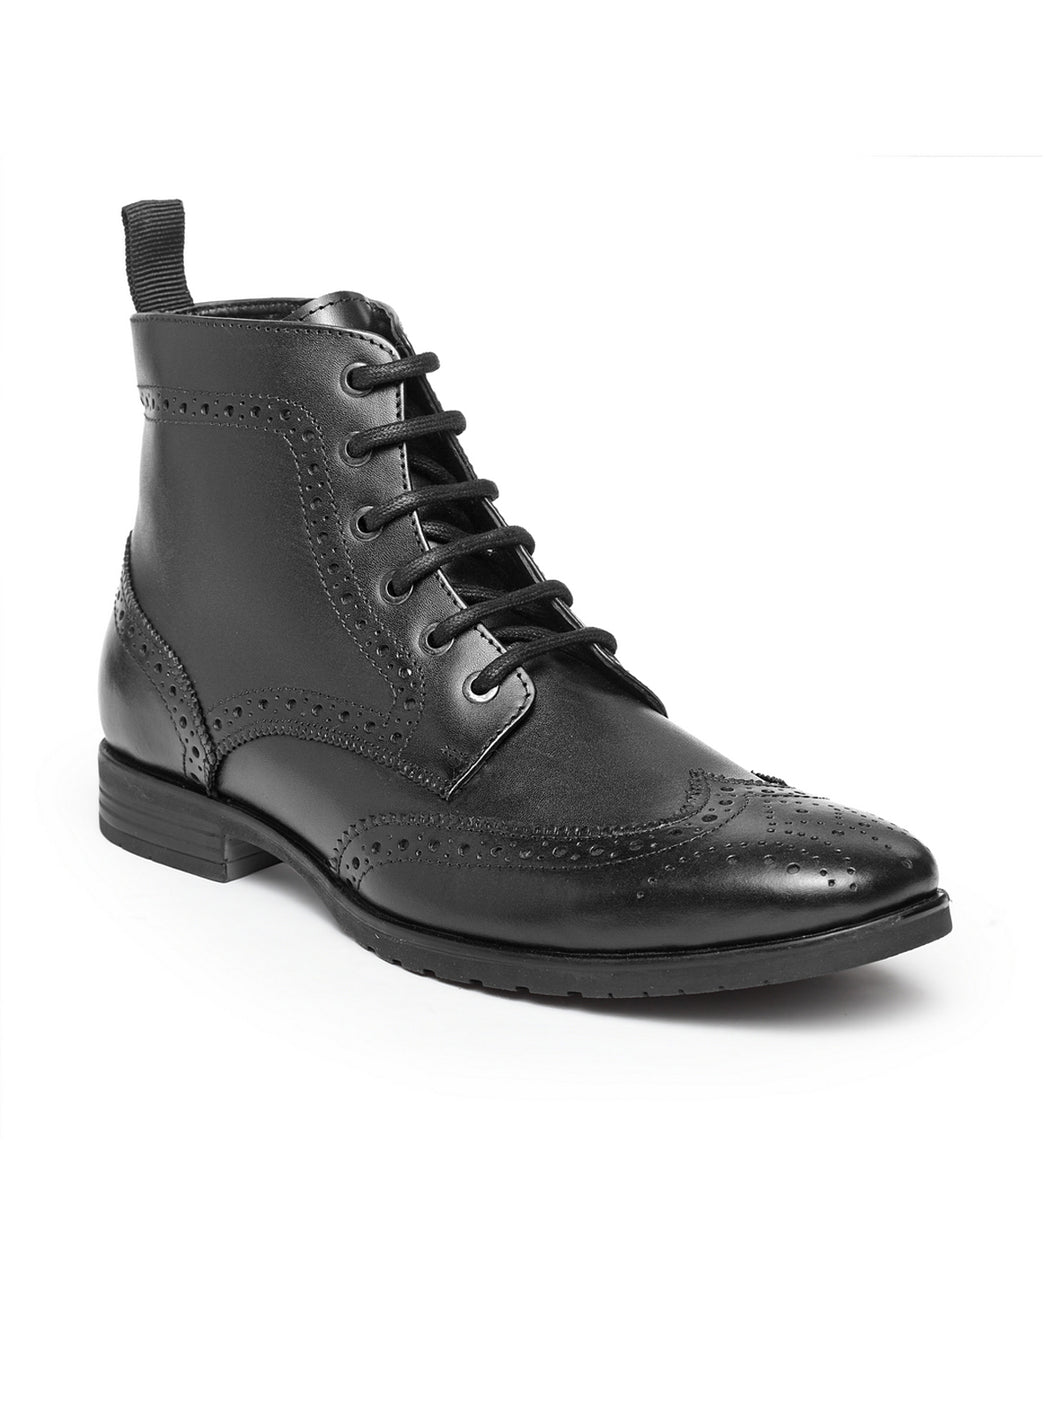 Teakwood Leathers Men's Black Boots